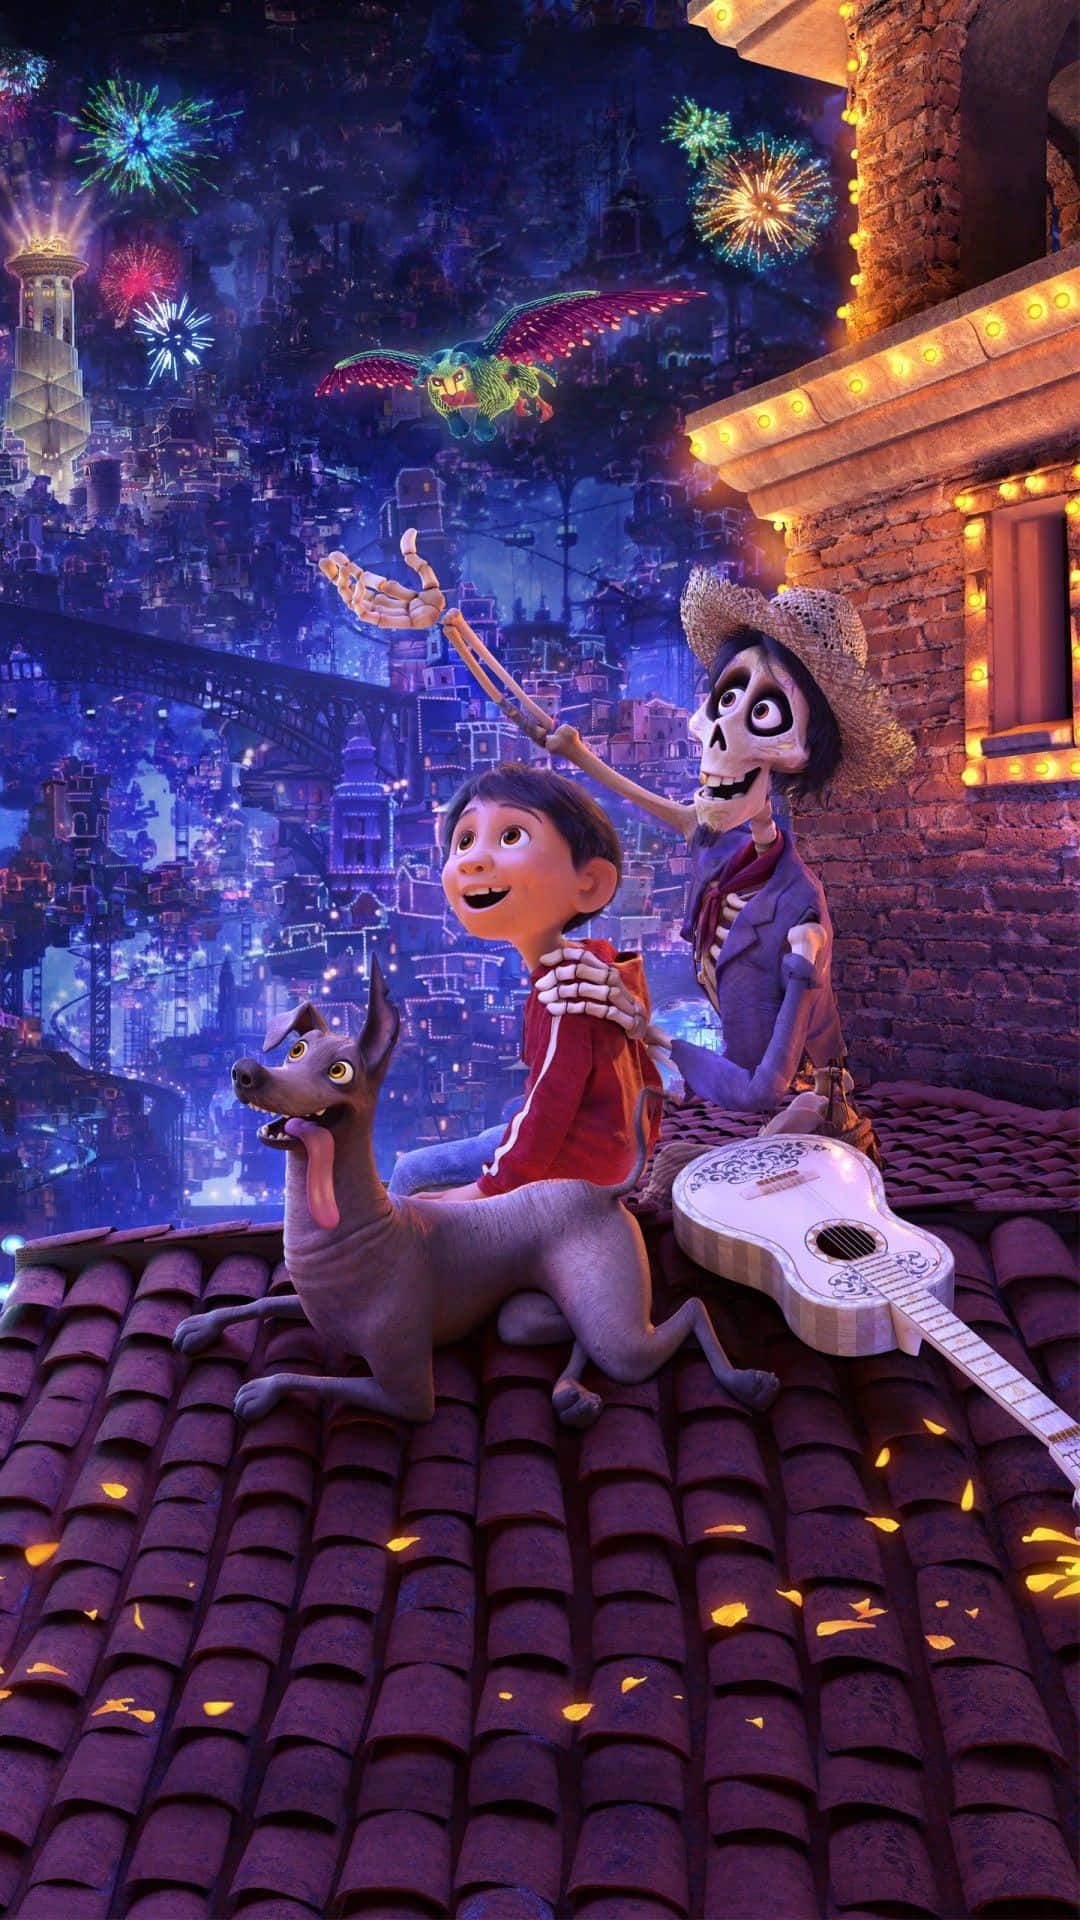 Pixar - Creating Childhood Magic